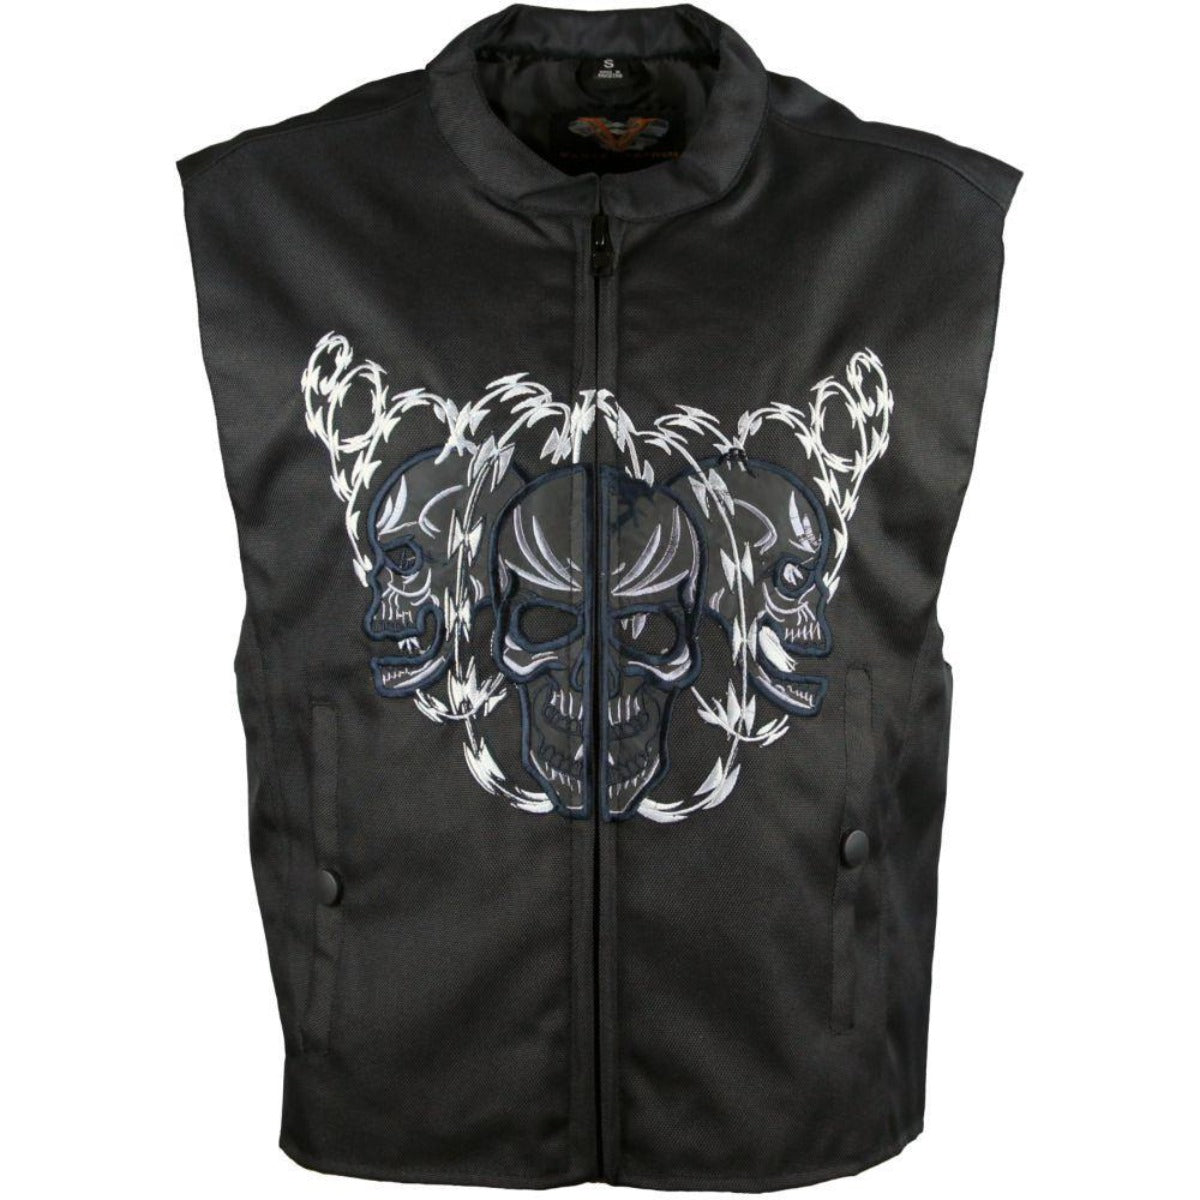 Vance Leather Men's Textile Vest with Reflective Skull